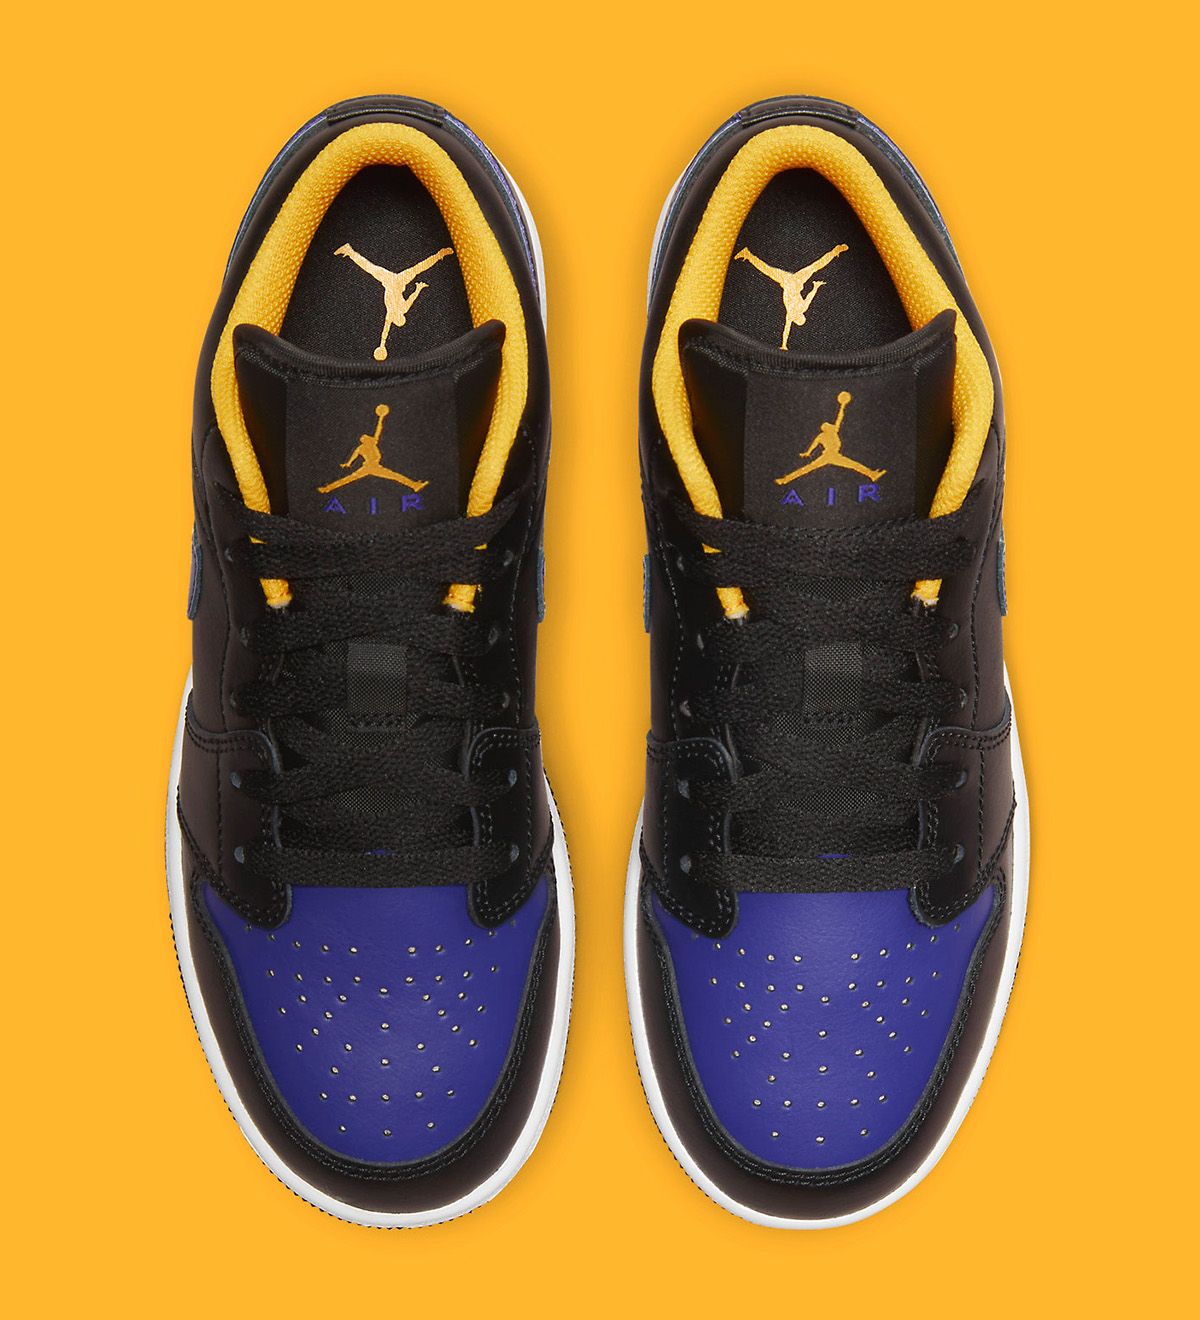 First Looks // Air Jordan 1 Low “Lakers” | House of Heat°